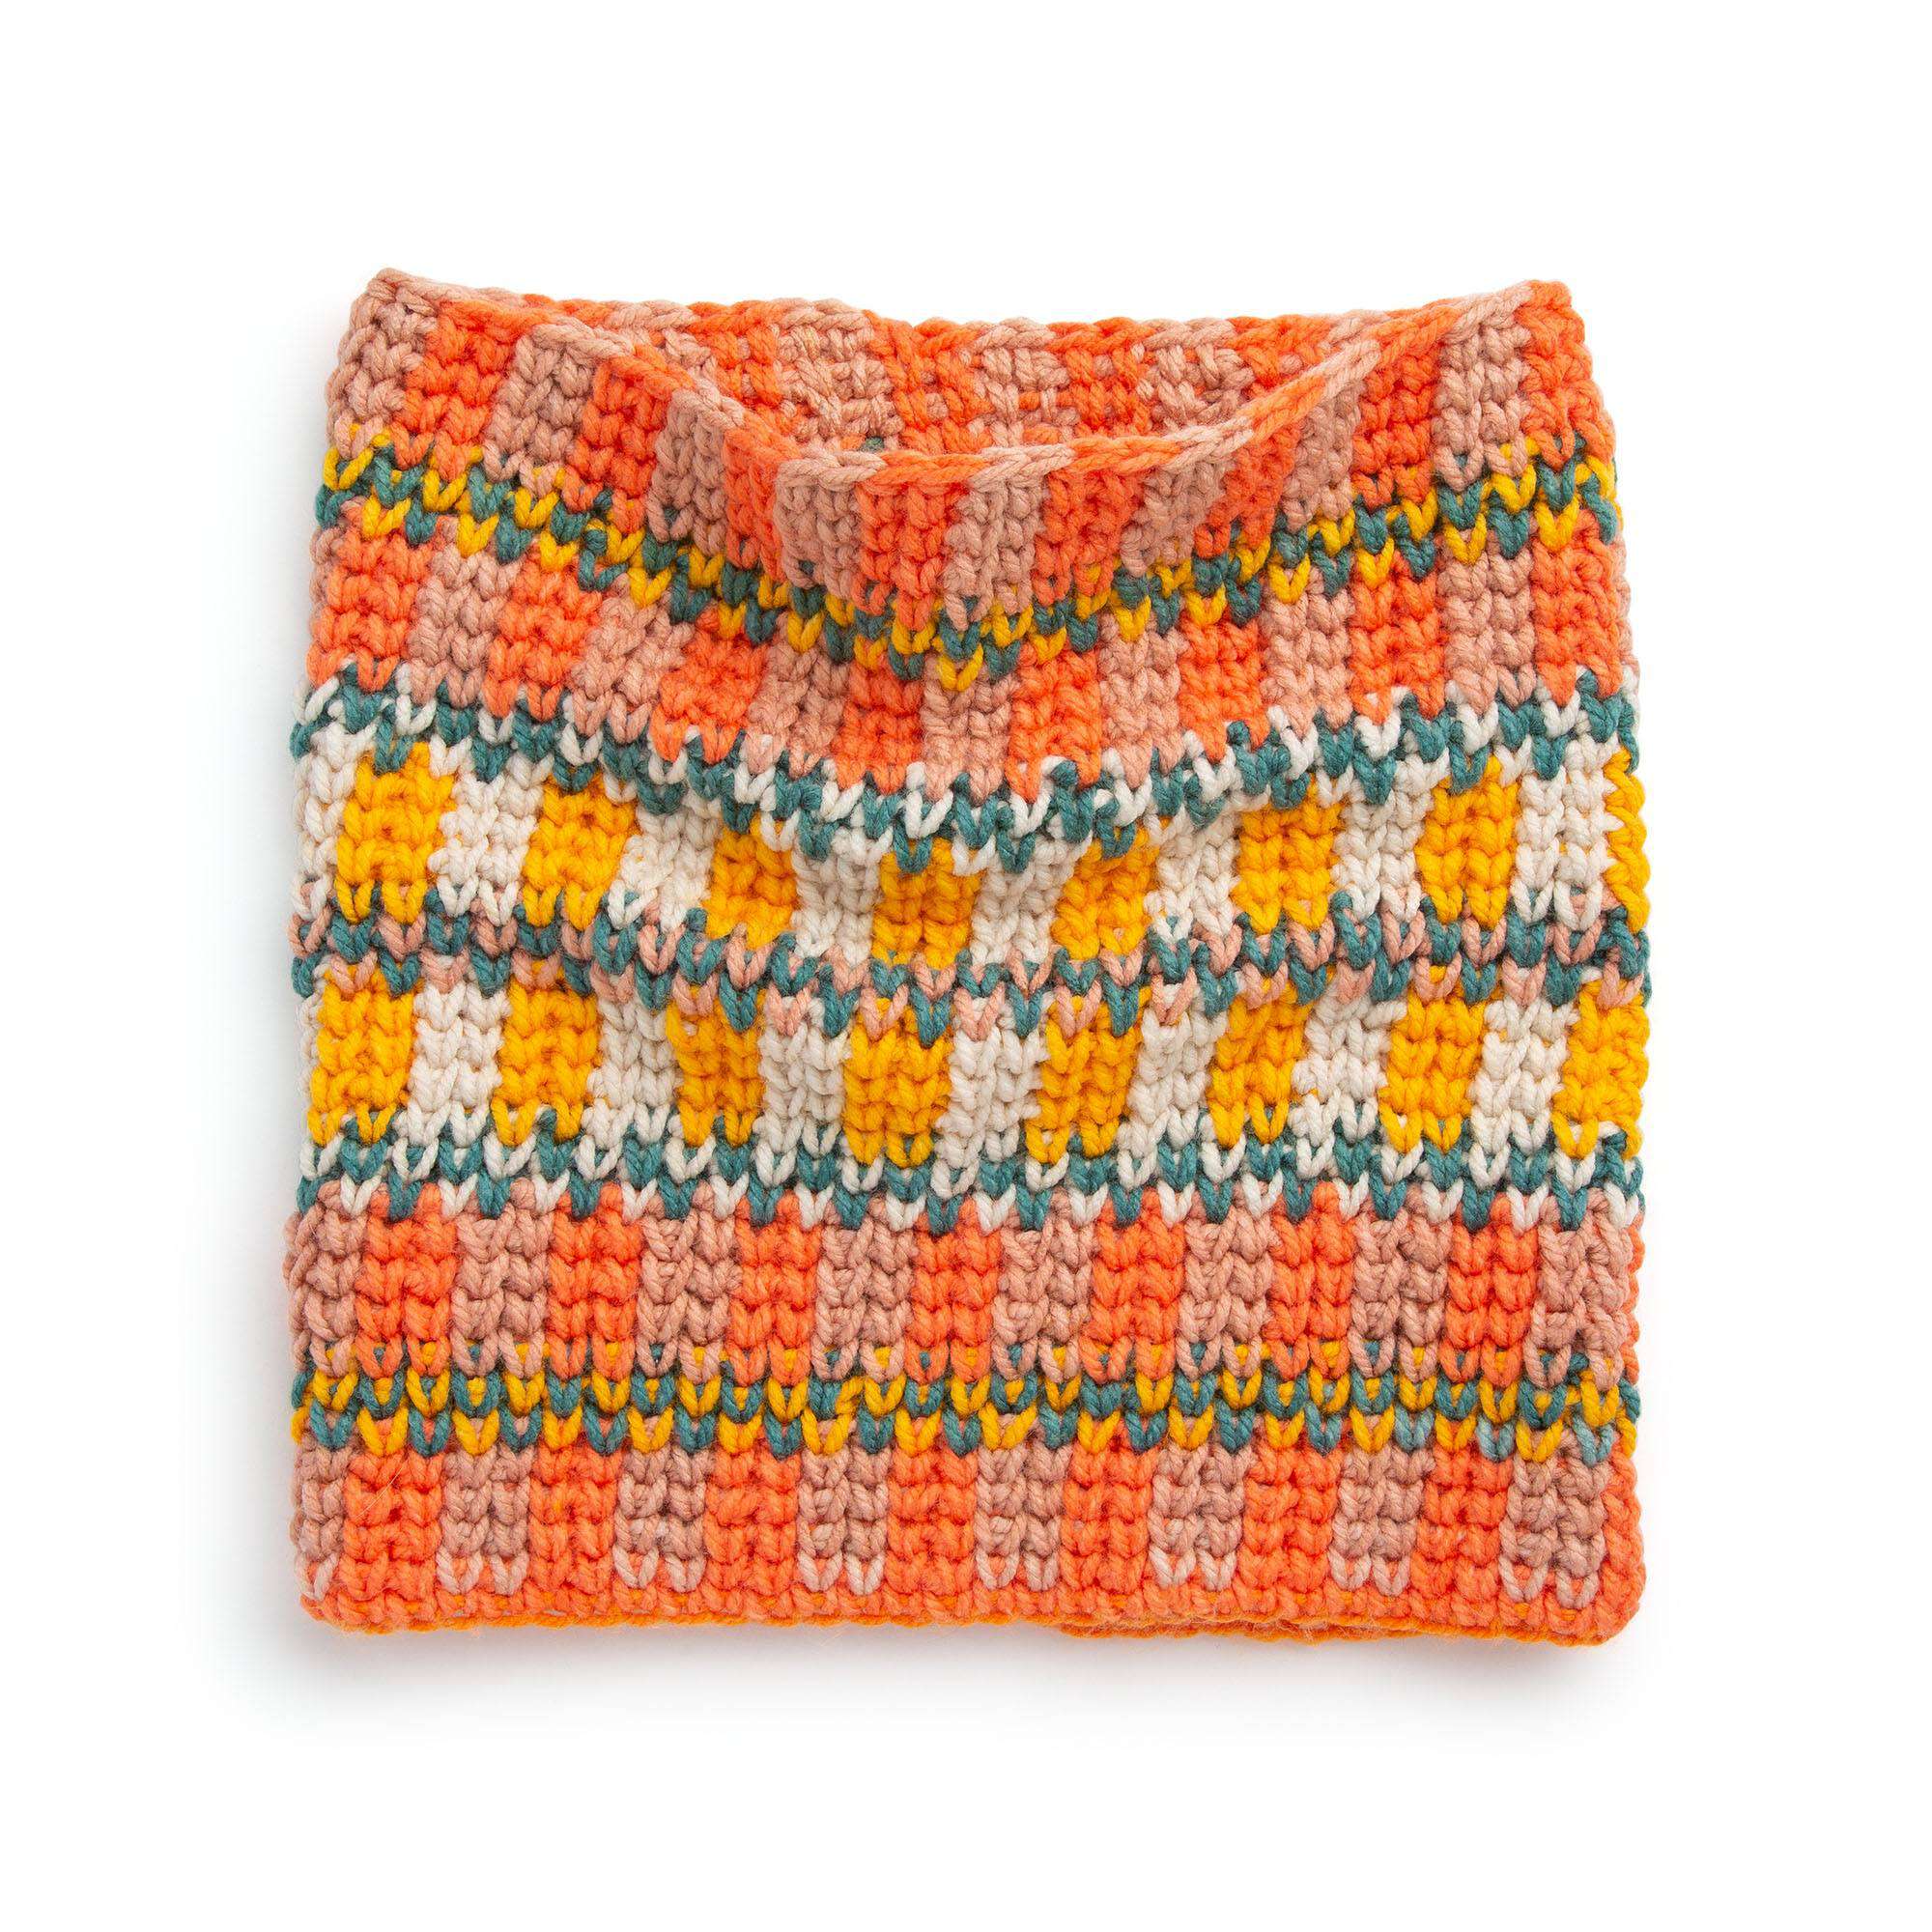 Caron Fair Isle Crochet Cowl Pattern | Yarnspirations